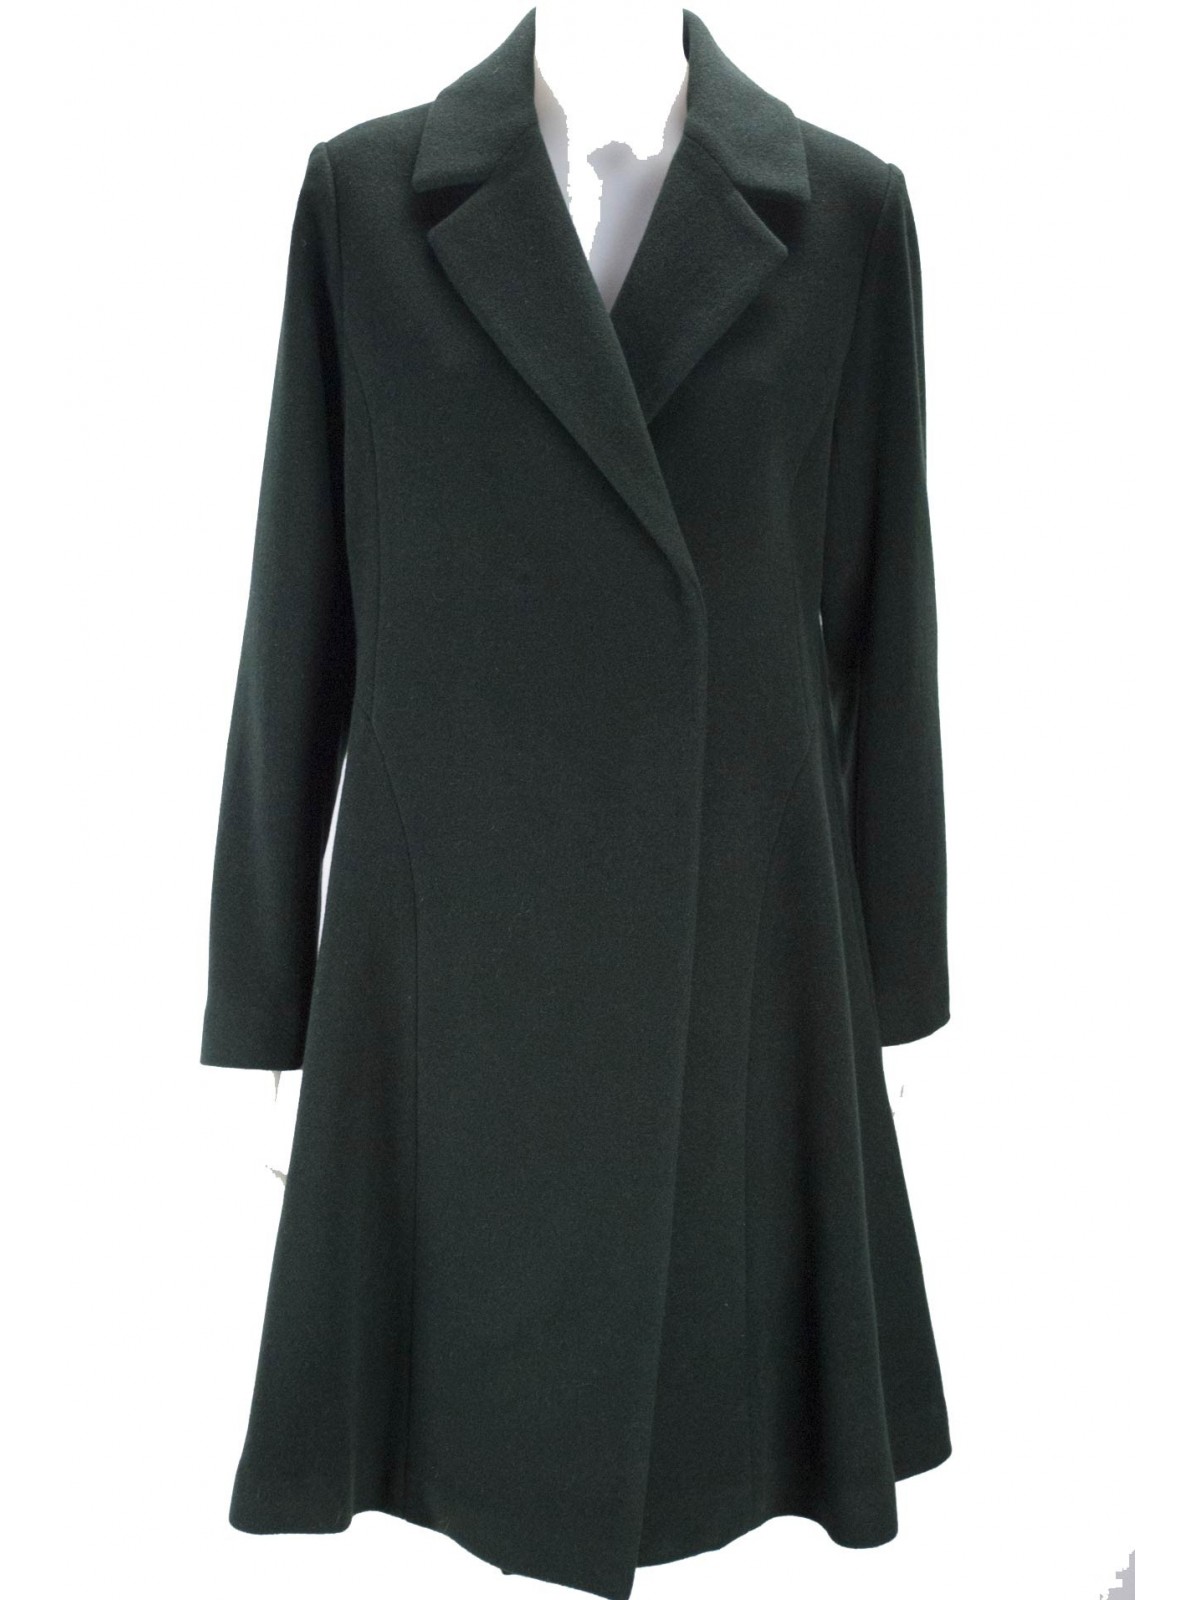 Lange Mantel Damen 46 L Tuch-Wolle-Grün - Montereggi